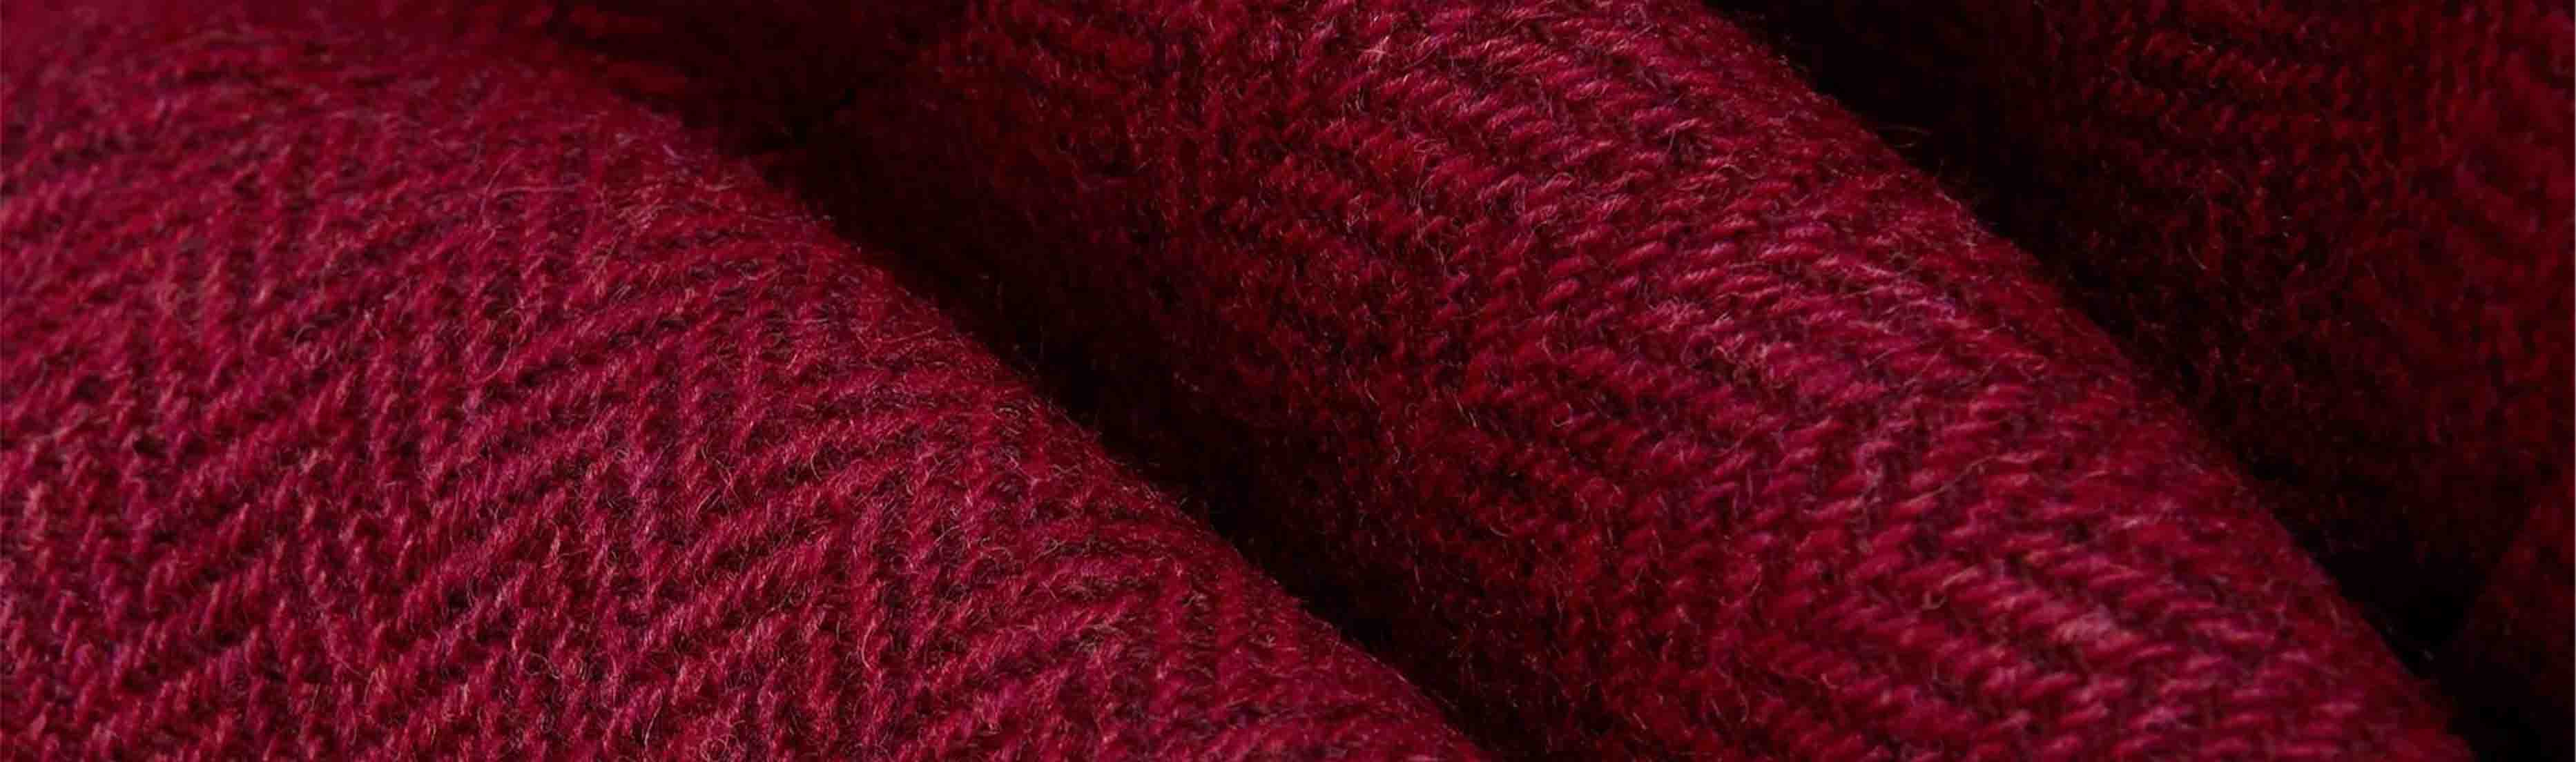 Close-up of a burgundy jacket.